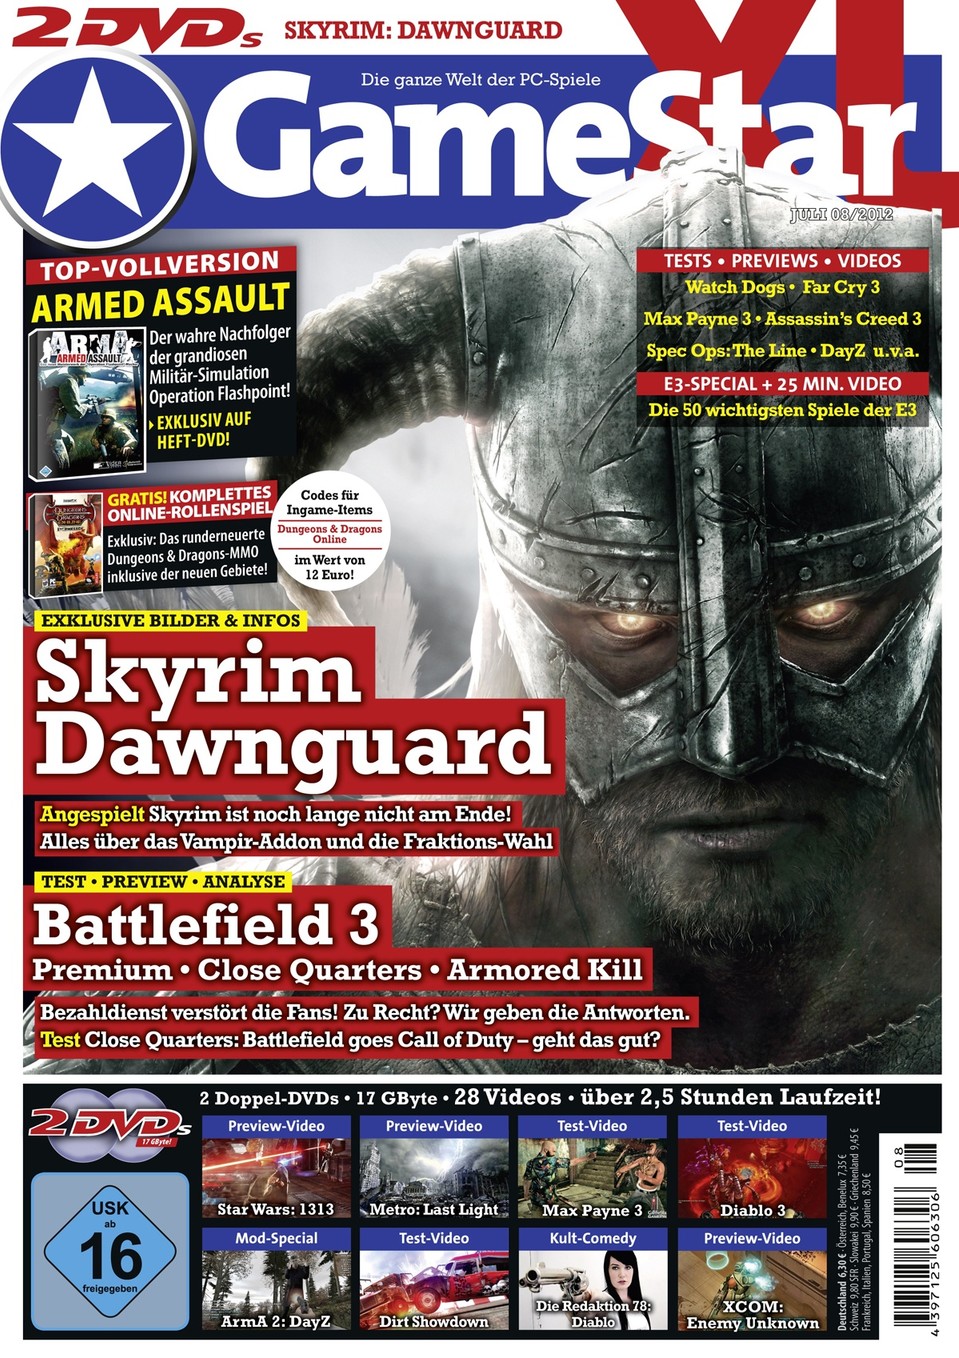 Cover der GameStar XL (08/12) - ab 27. Juni am Kiosk erhältlich.